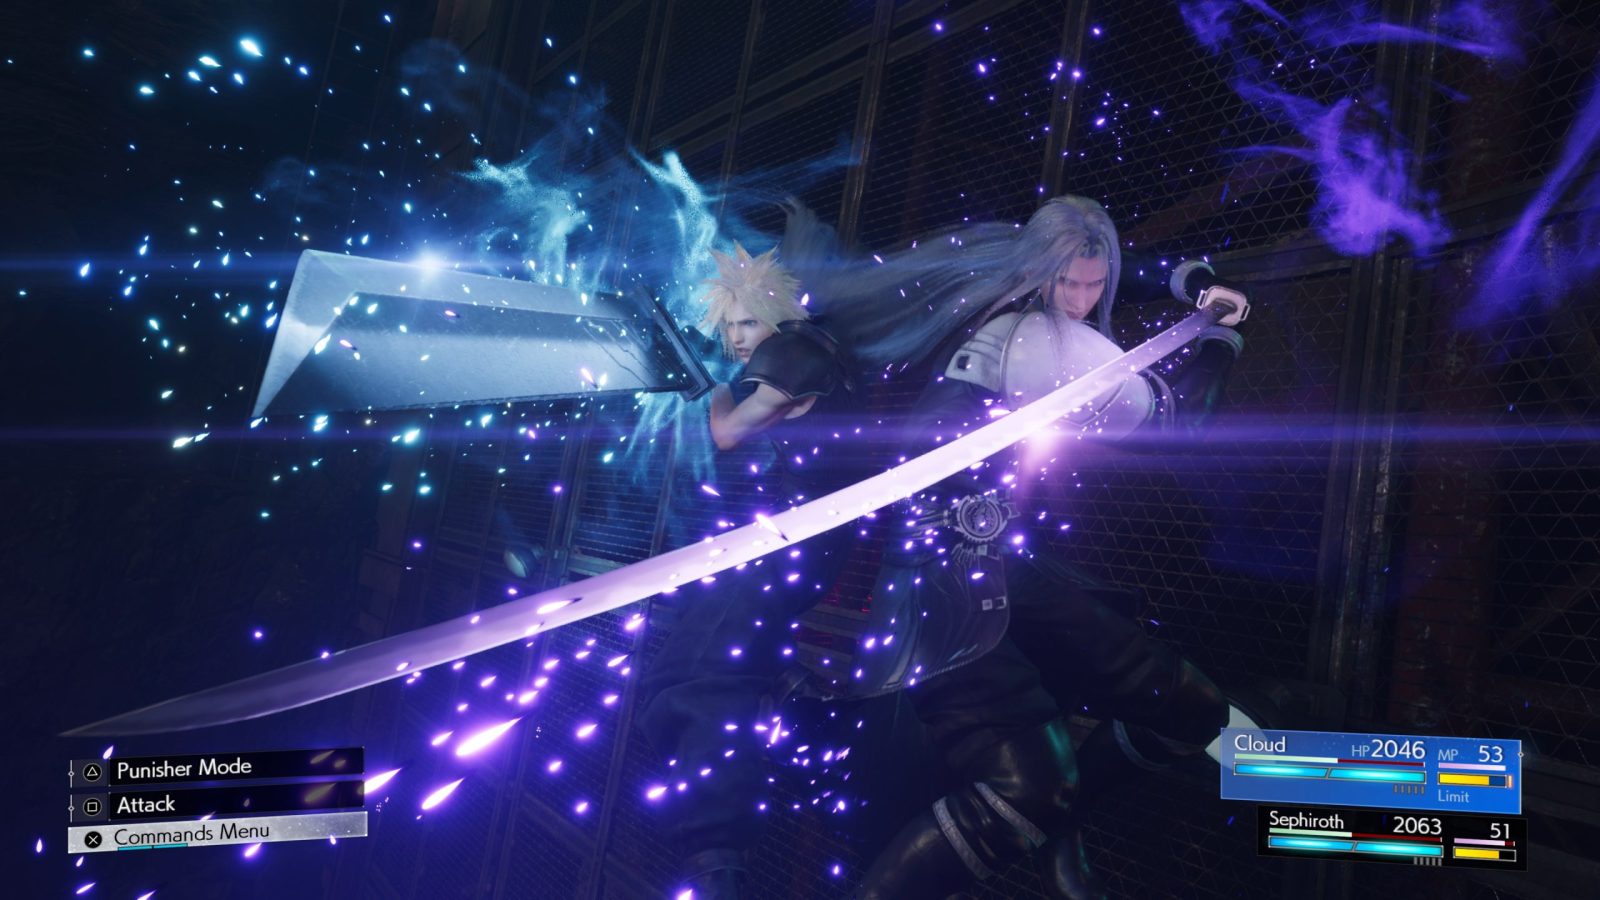 Final Fantasy VII Rebirth Hands-On Impressions - Masamune's